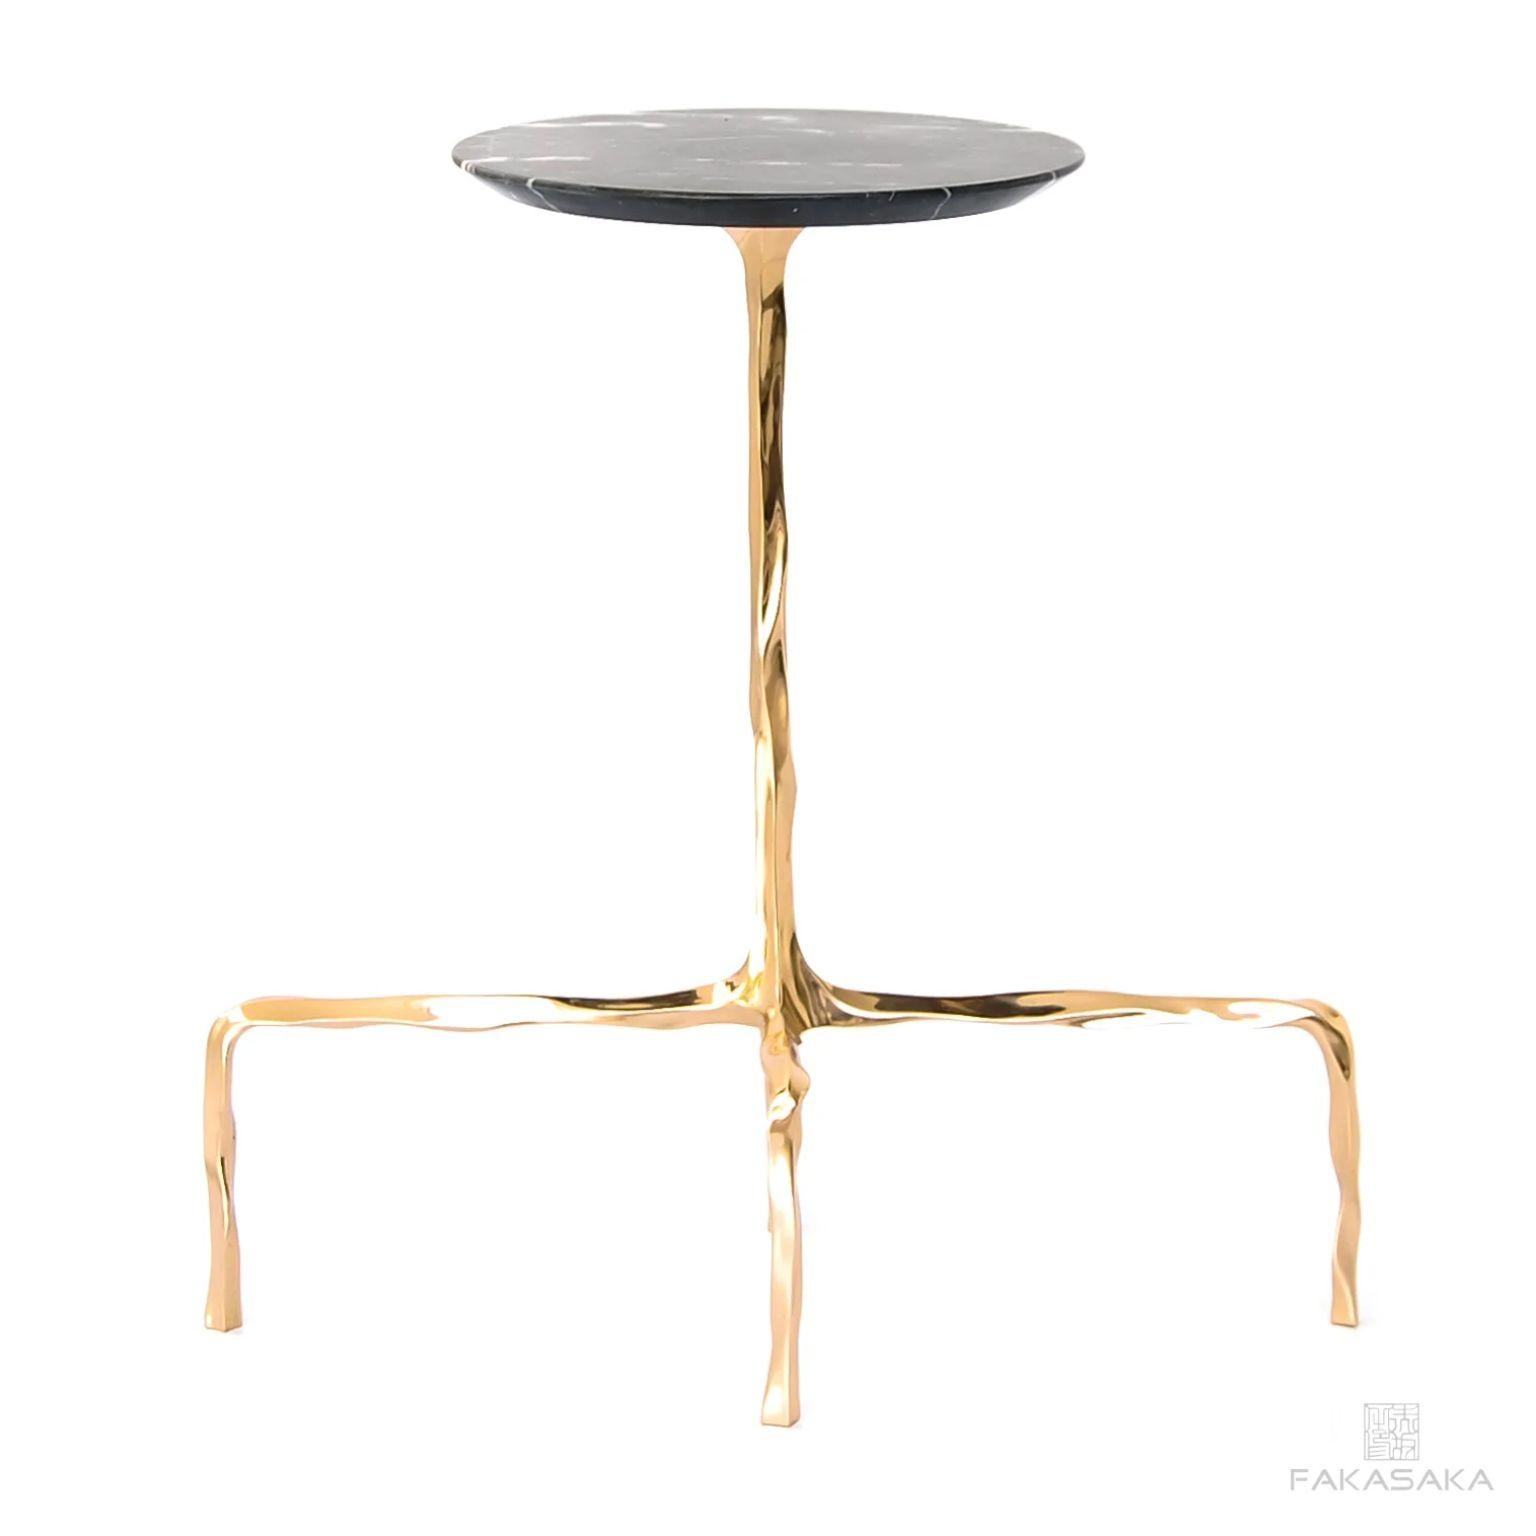 Moderne Table à boissons Presley avec plateau en marbre Nero Marquina de Fakasaka Design en vente